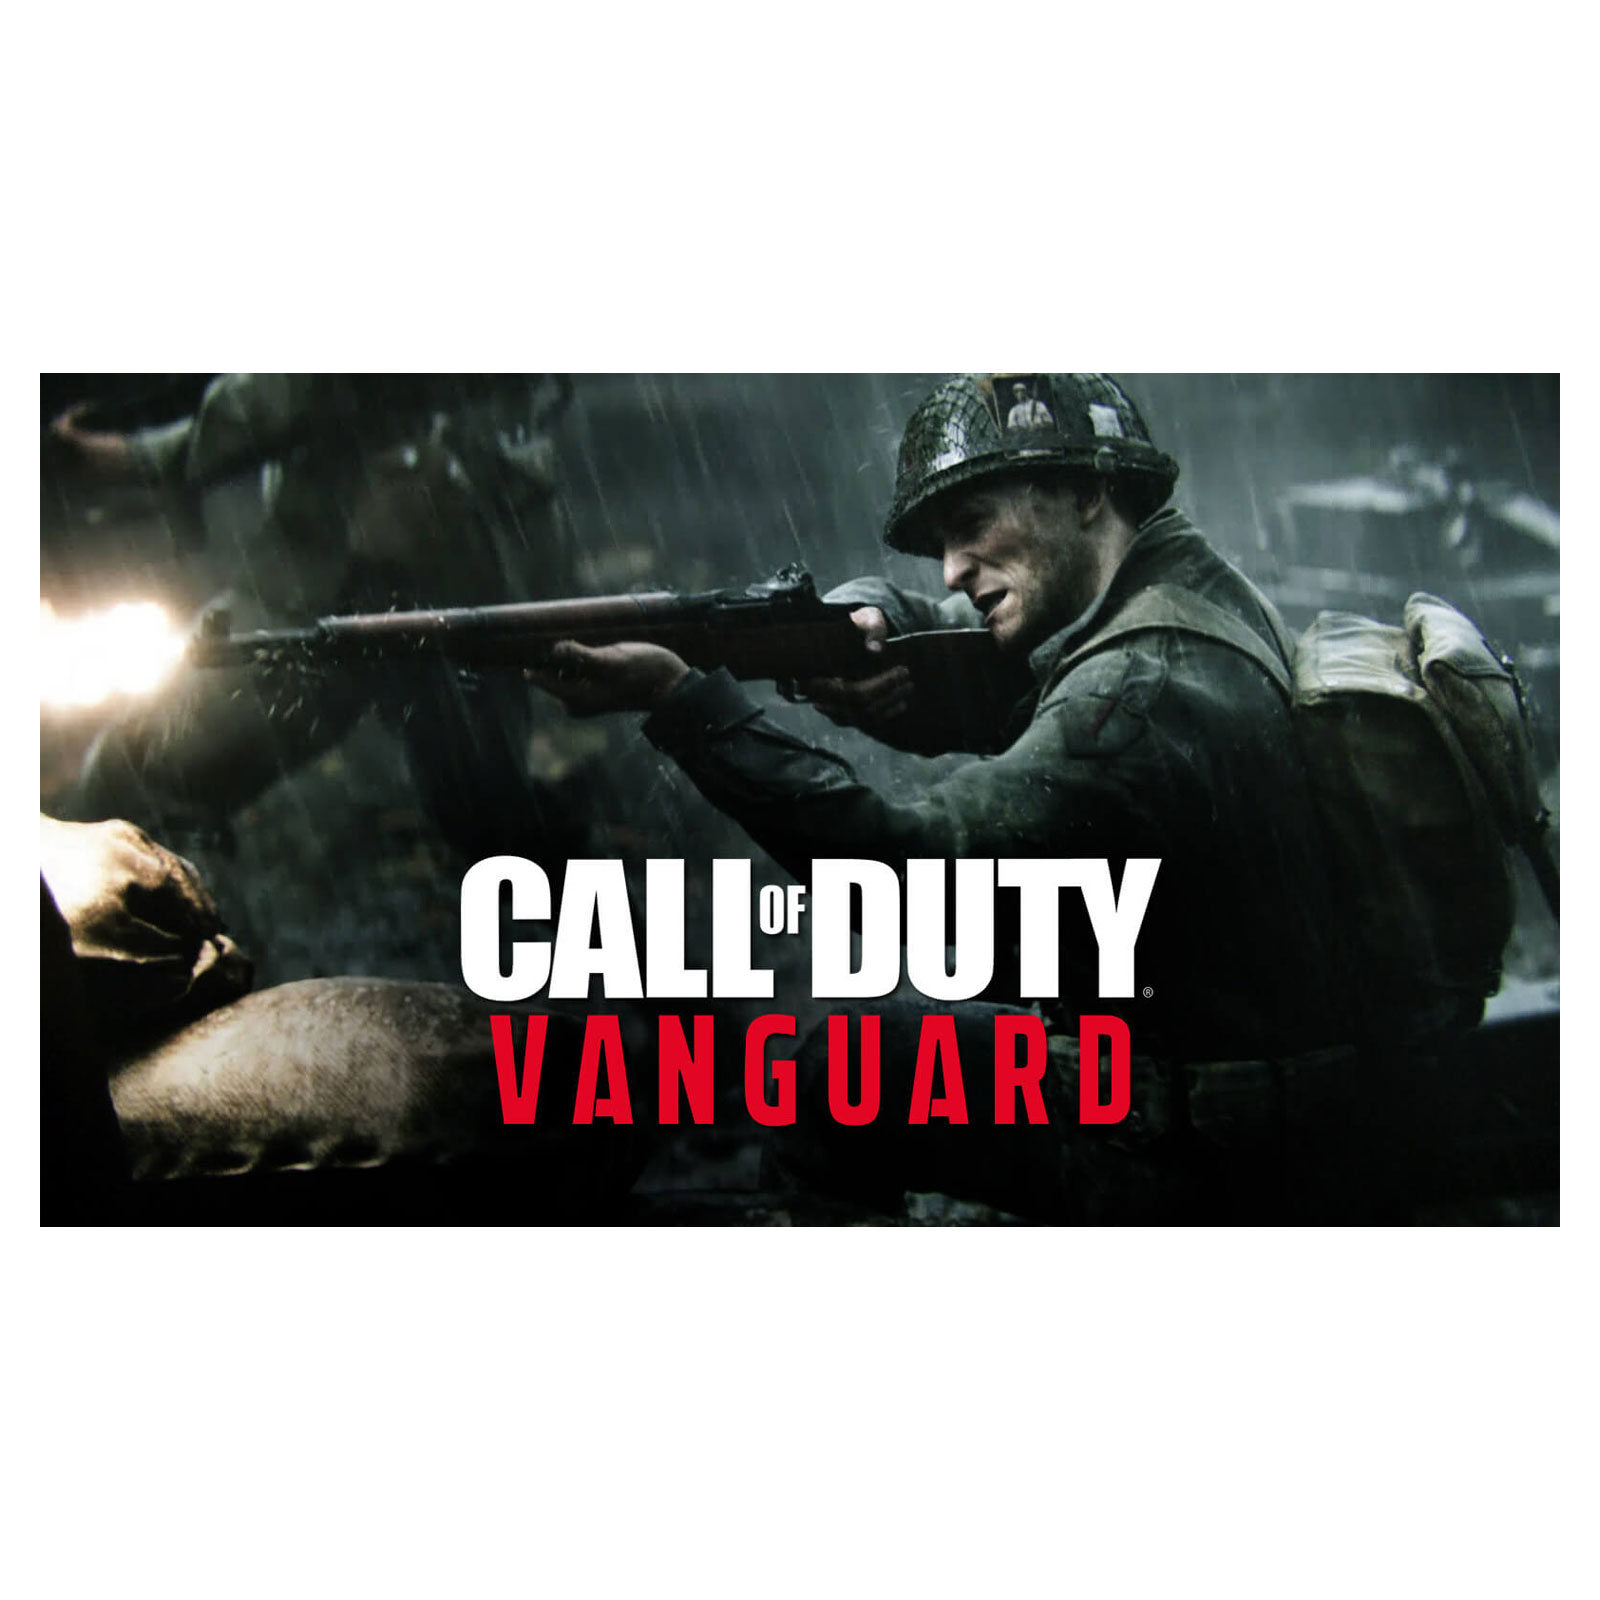 بازی Call of Duty: Vanguard مخصوص PS5